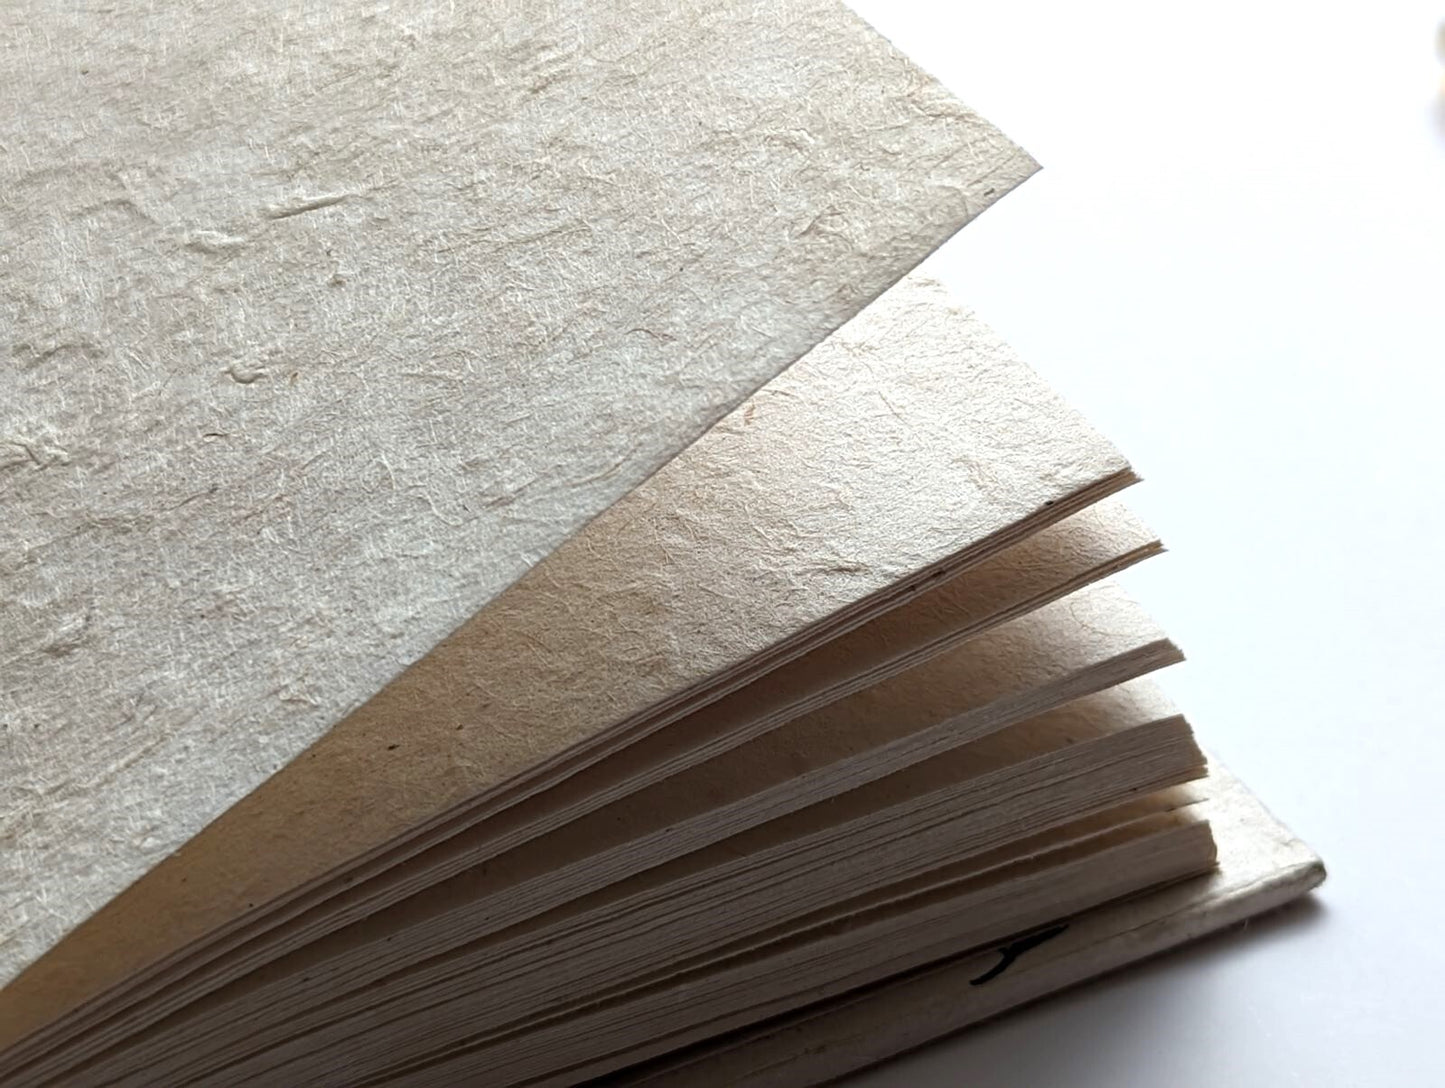 Handmade Paper Journal | Everything Journal - Natural Beige